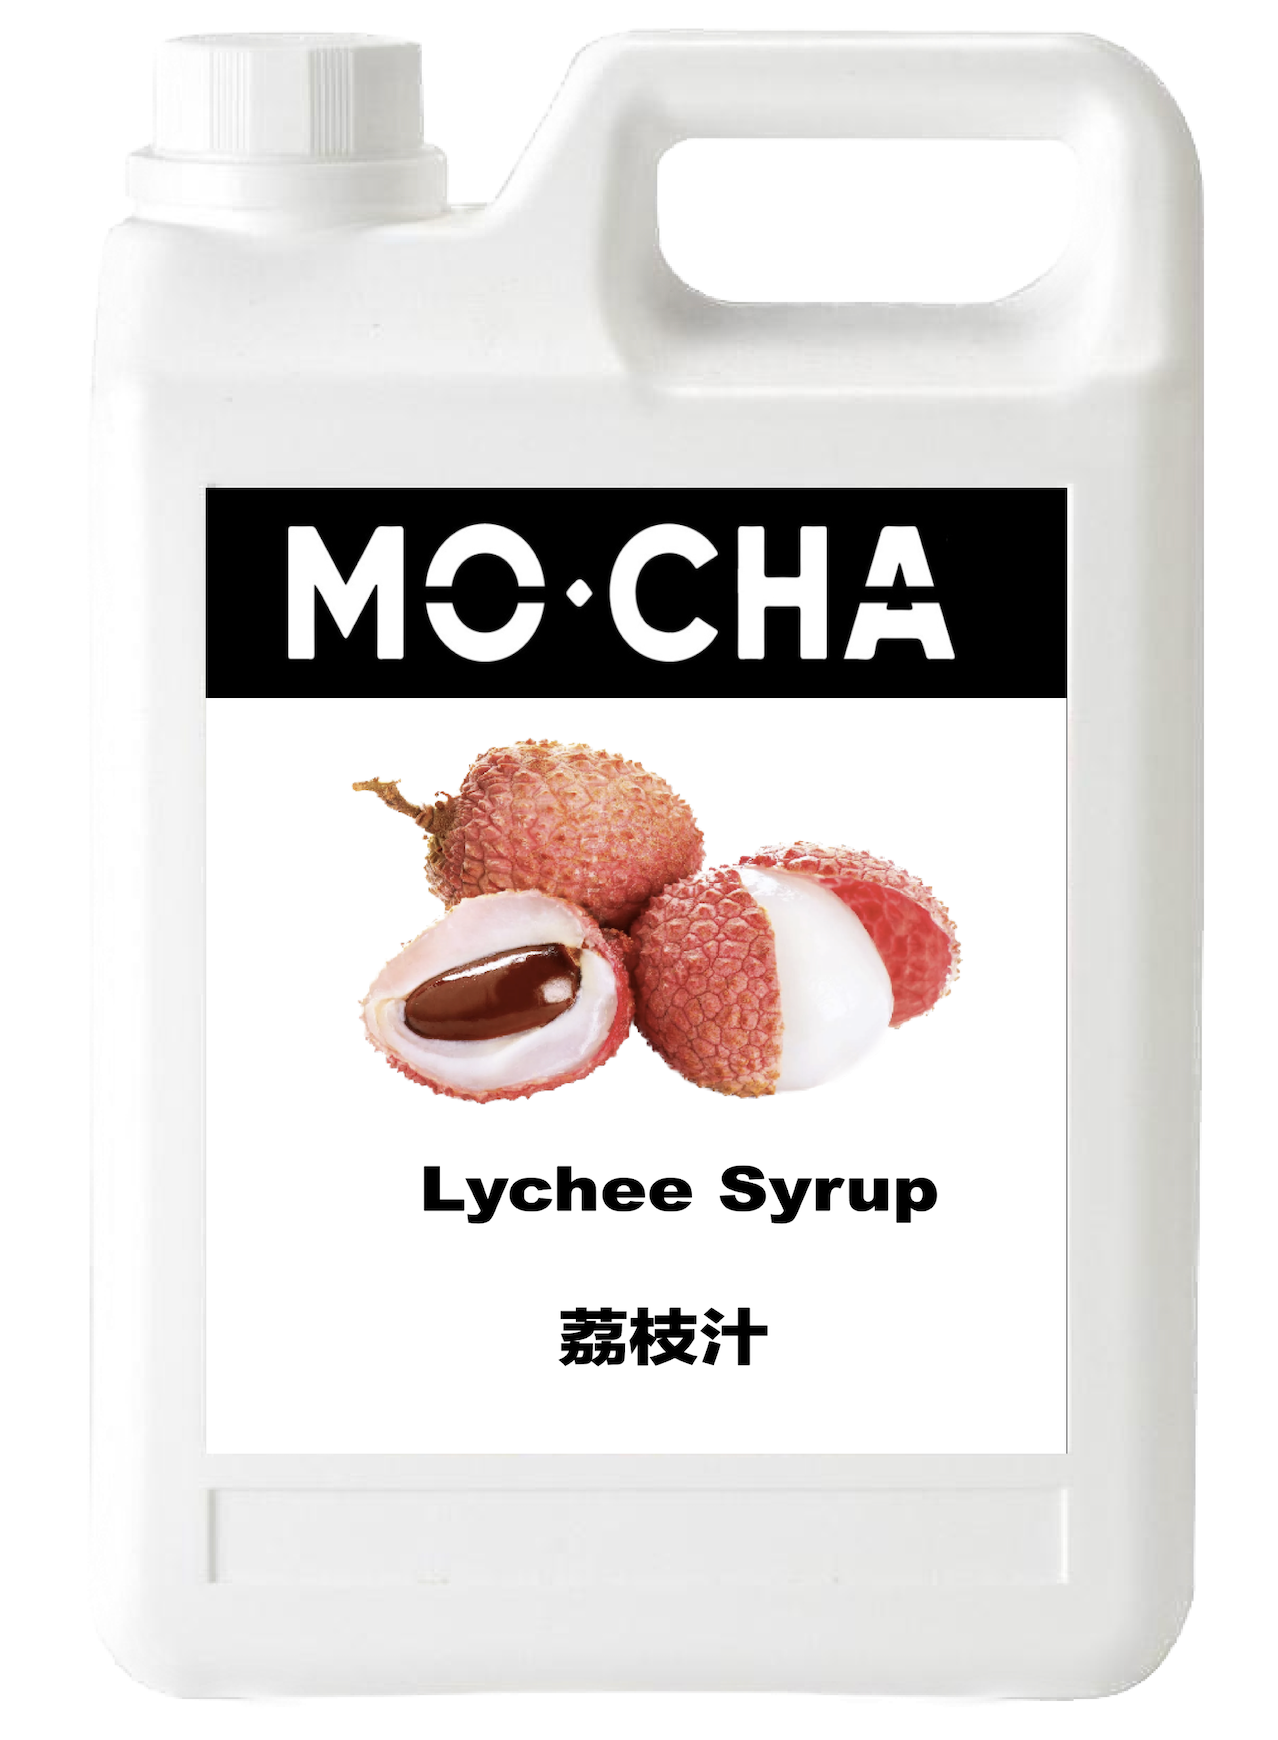 Yuherbau Lychee Syrup Sample Bottle